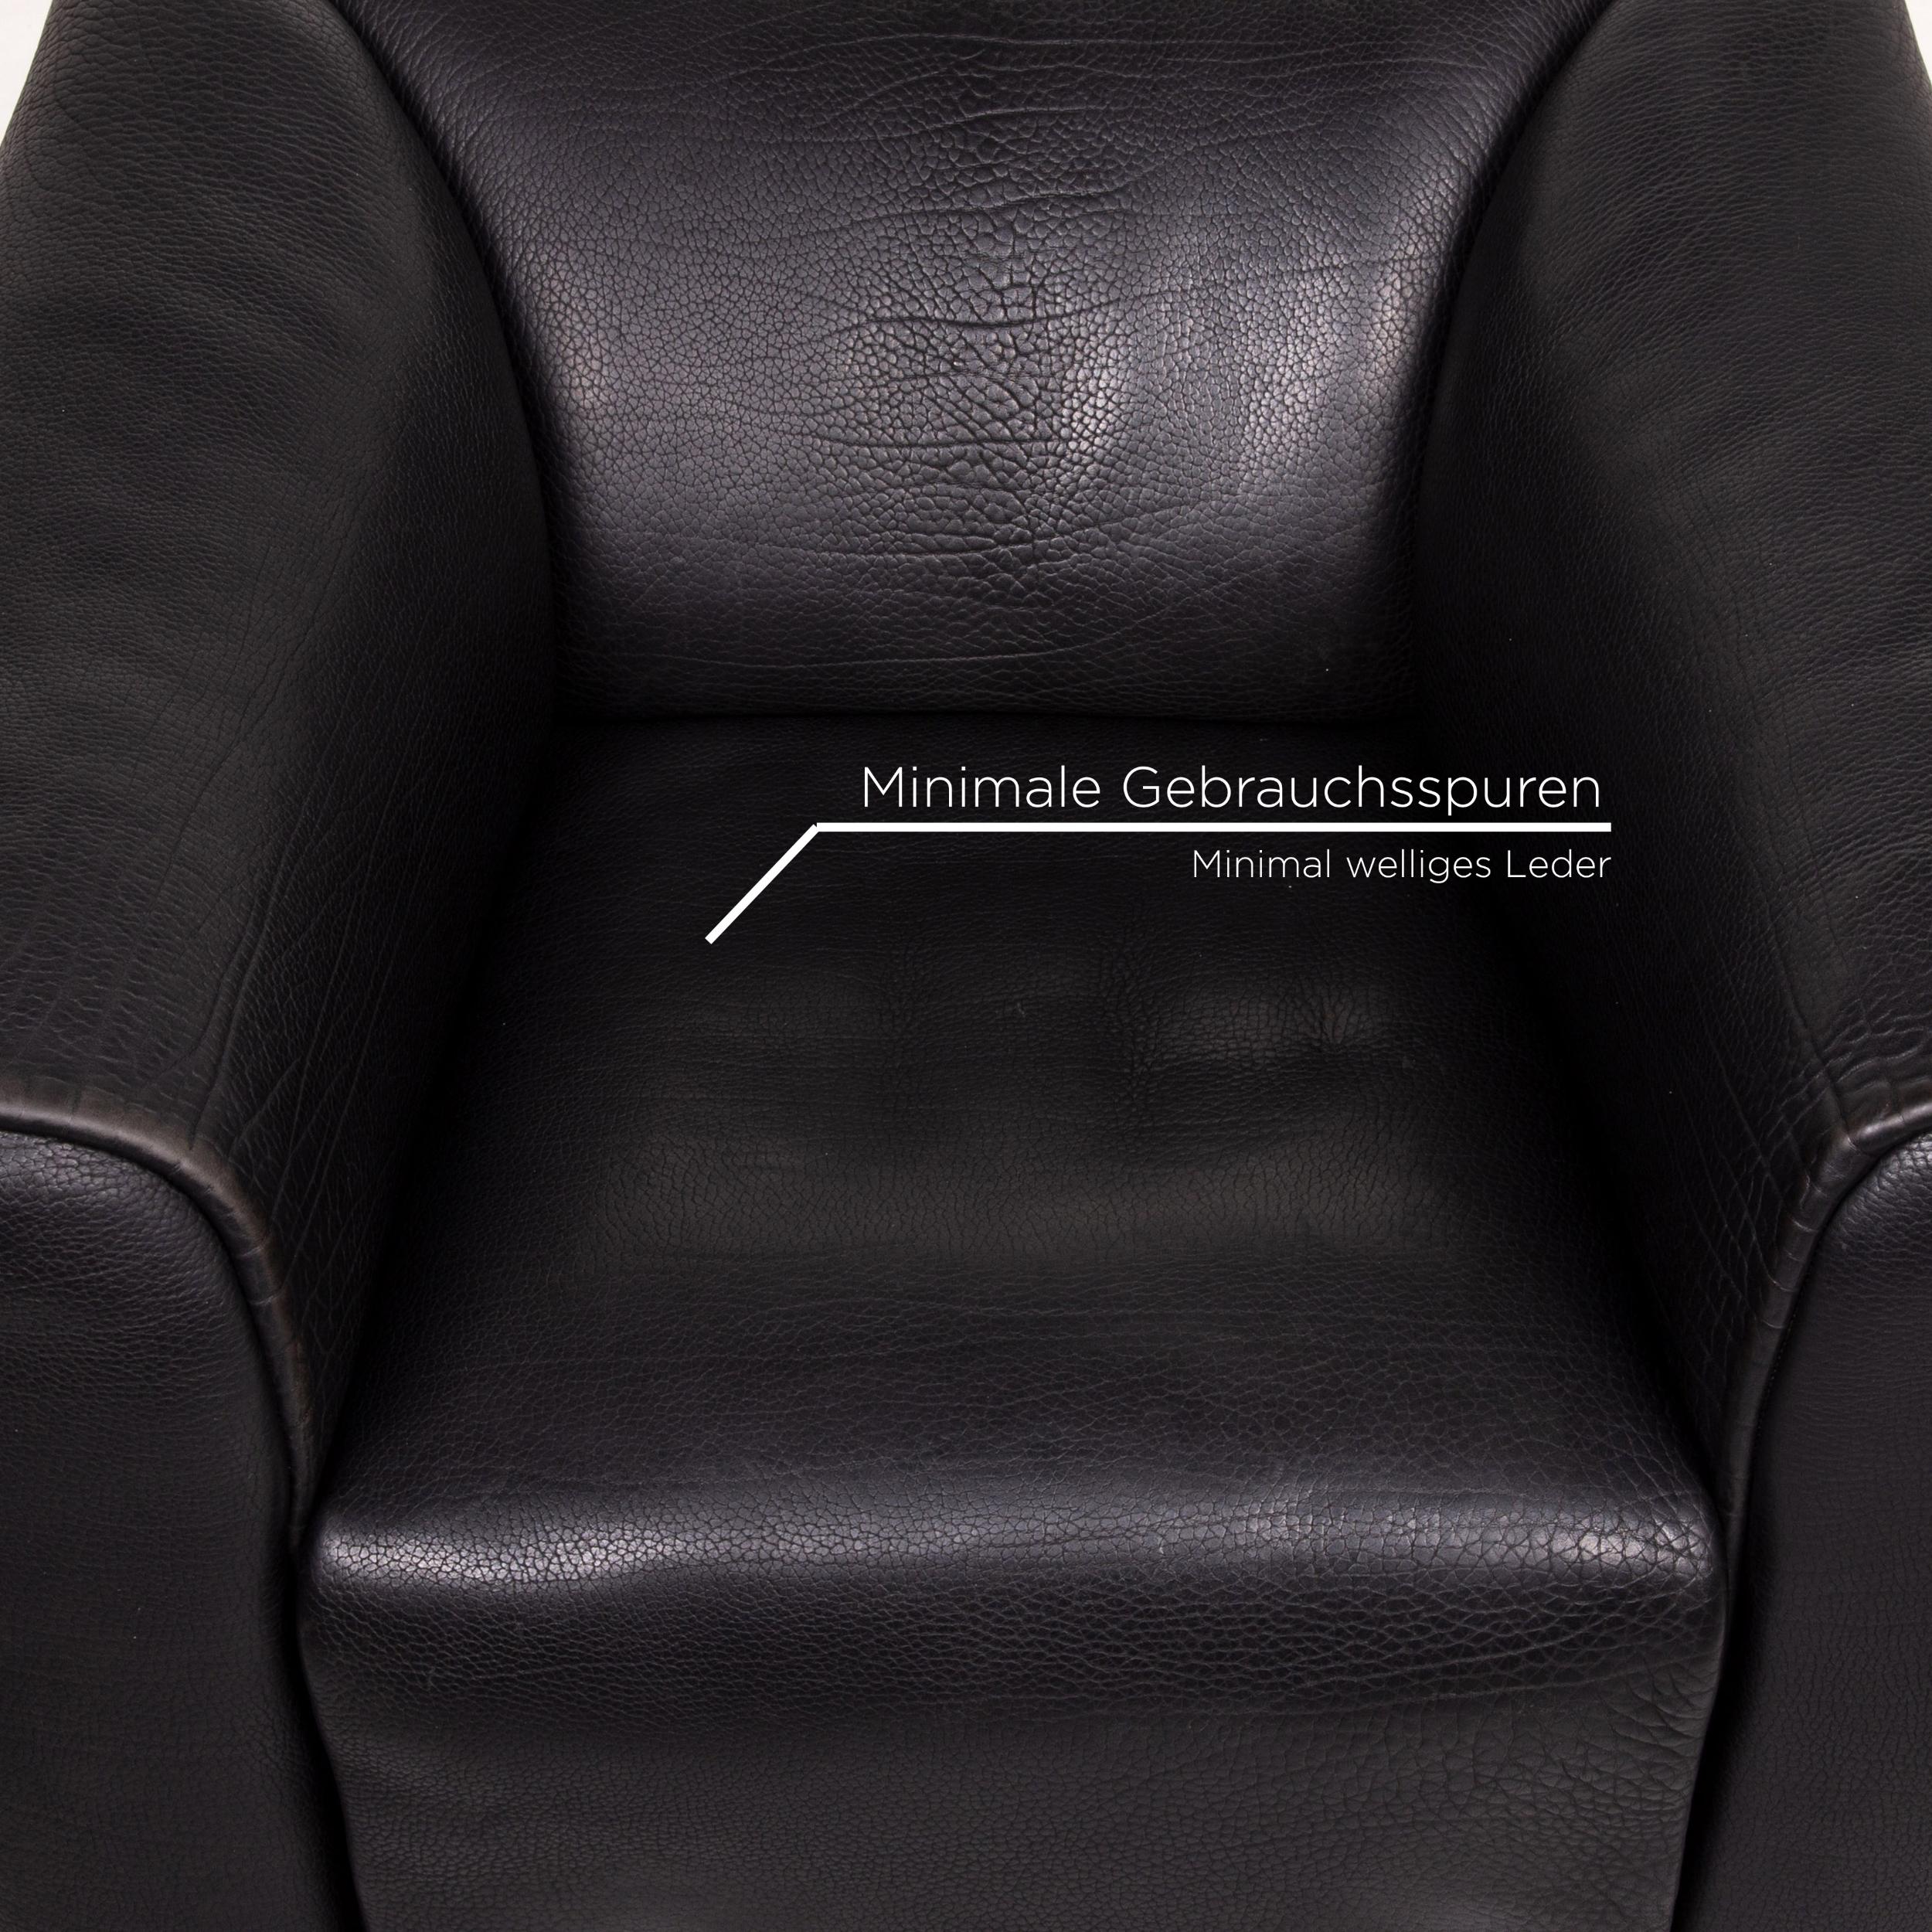 De Sede DS 47 Leather Armchair Black In Good Condition For Sale In Cologne, DE